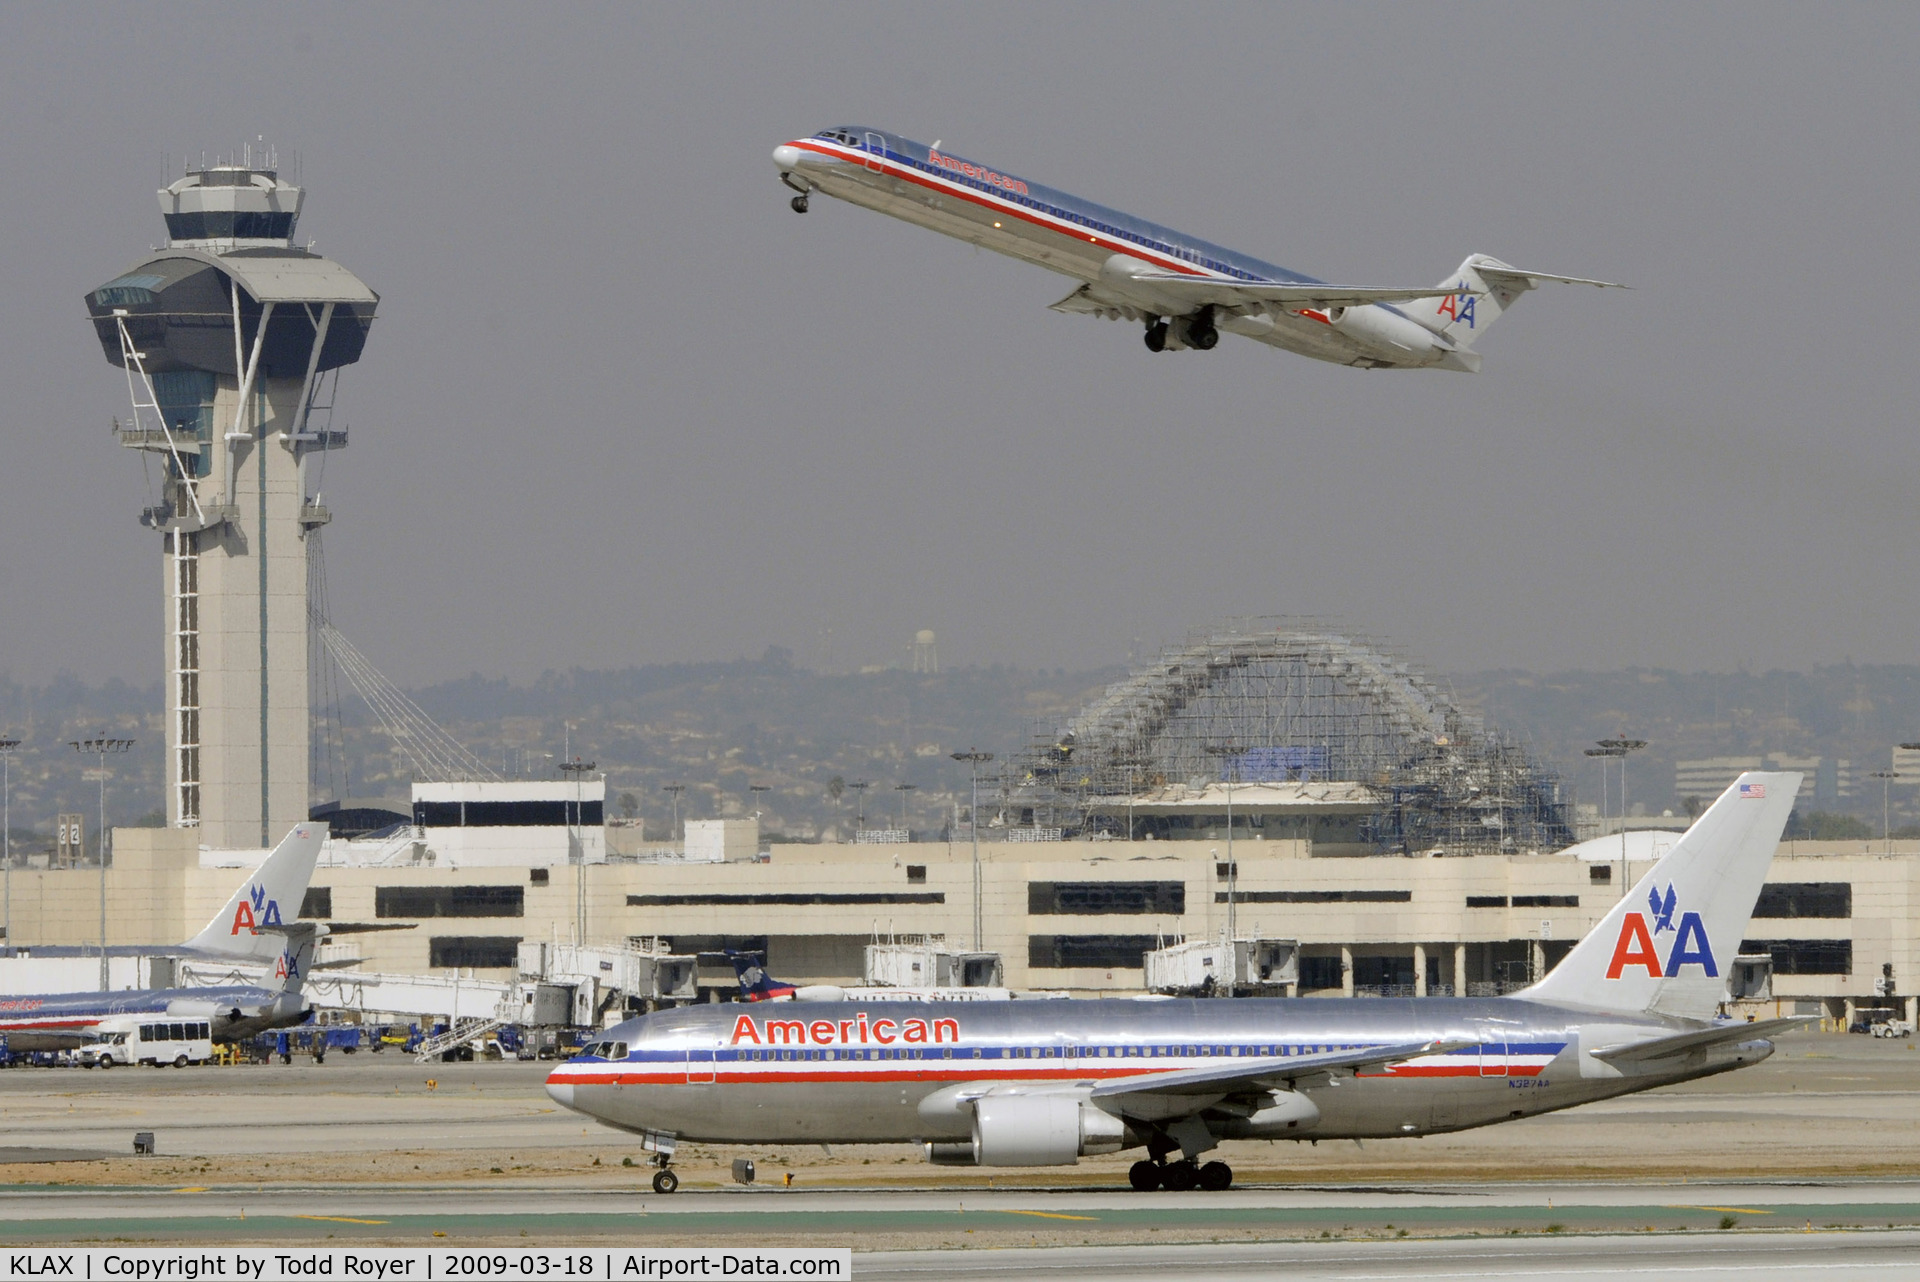 Los Angeles International Airport (LAX) - LAX Traffic